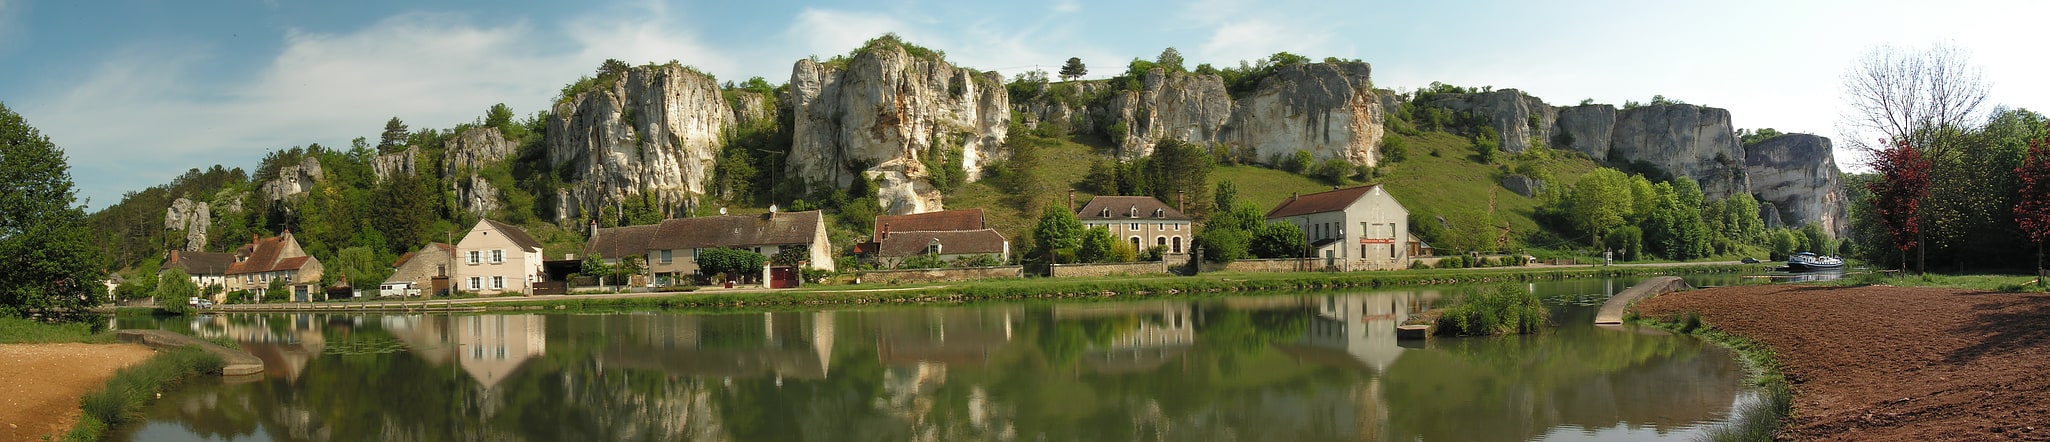 Merry-sur-Yonne, Frankreich